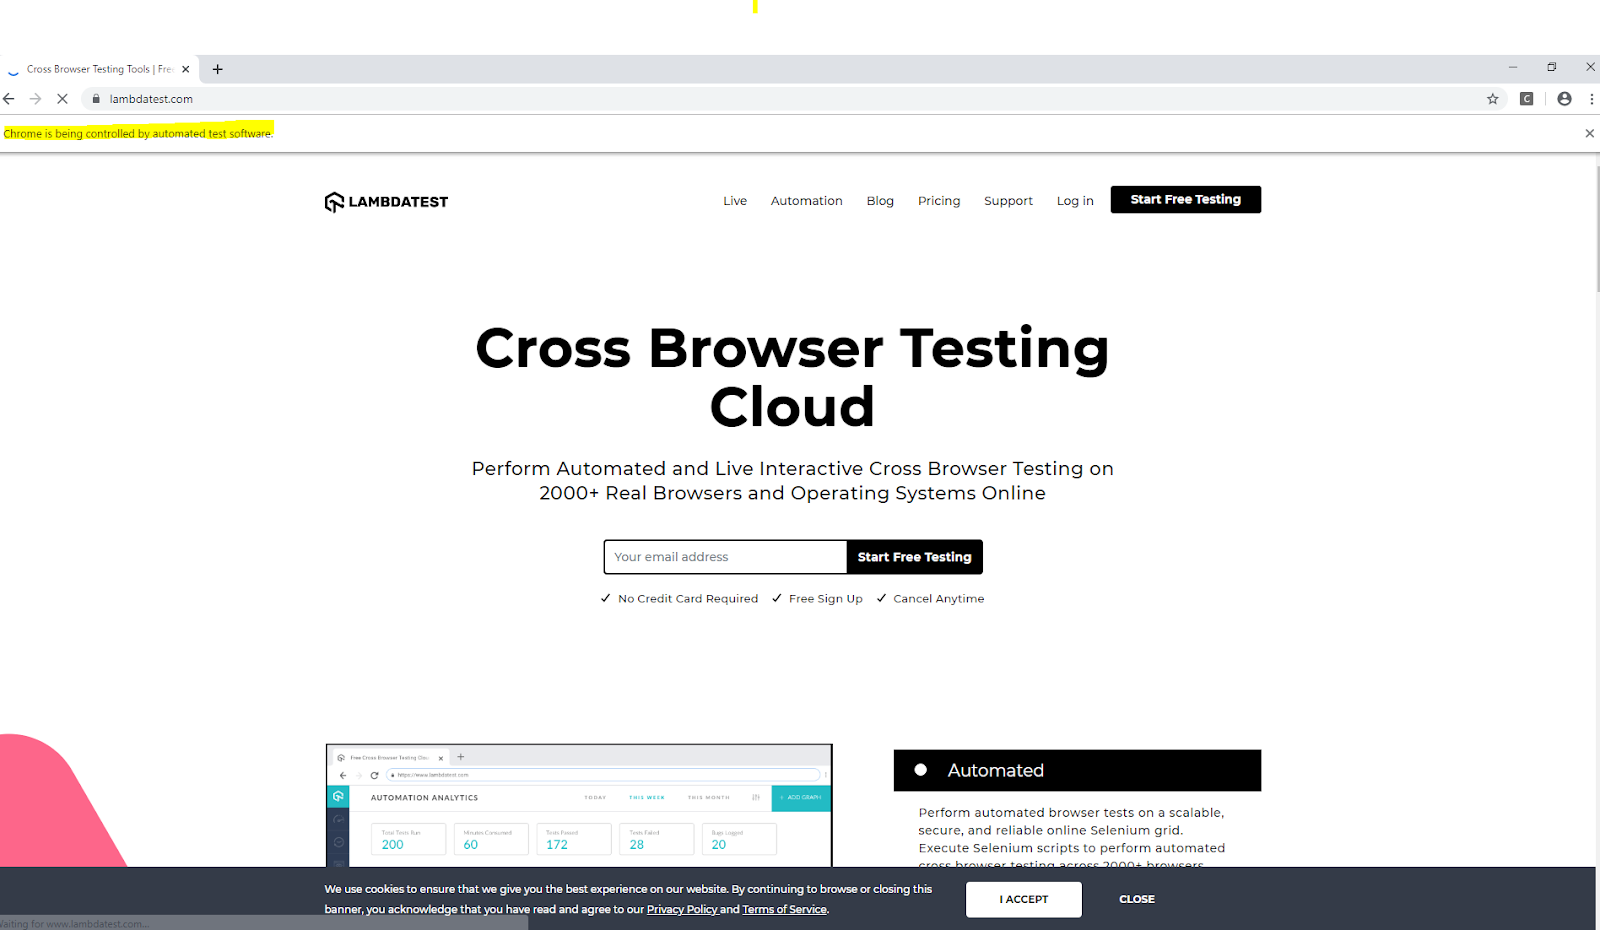 Cross Browser Testing Cloud